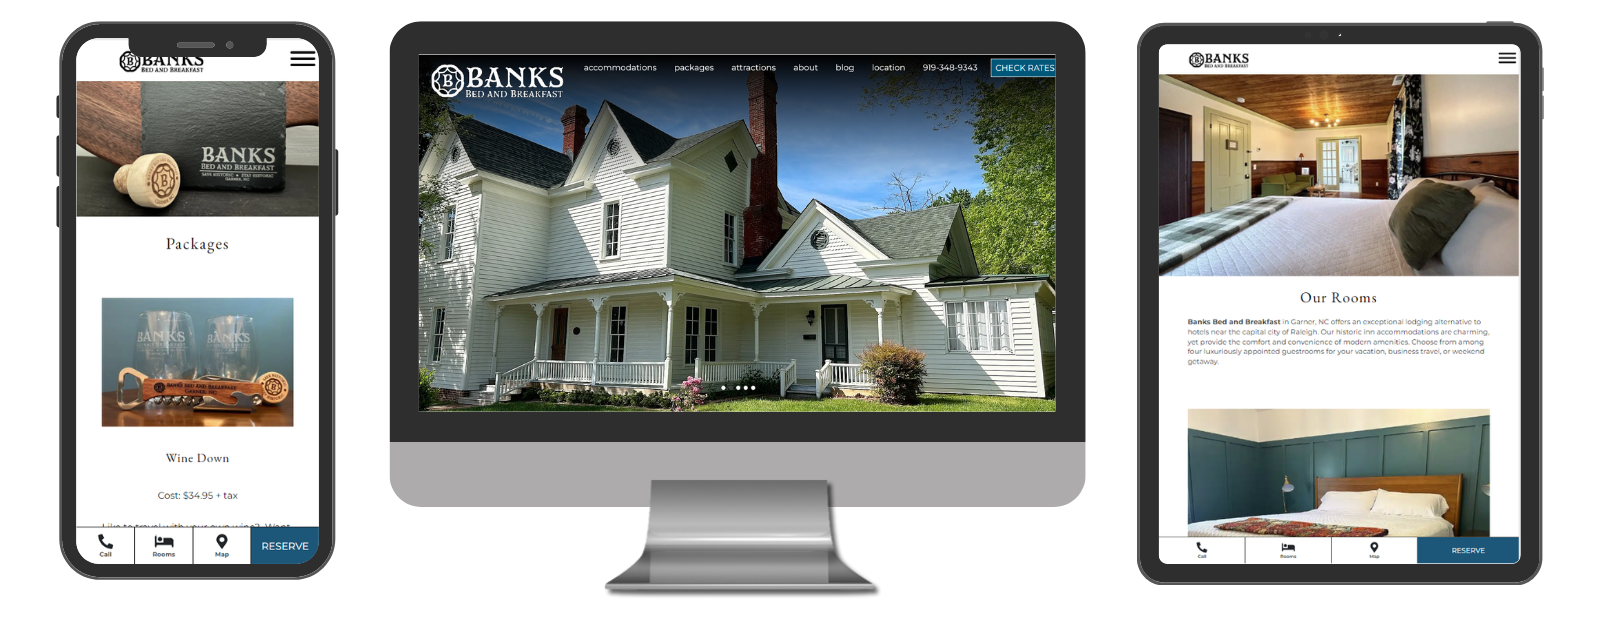 Banks Bed & Breakfast in Garner, NC. Collage of desktop, mobile and tablet views of new website.